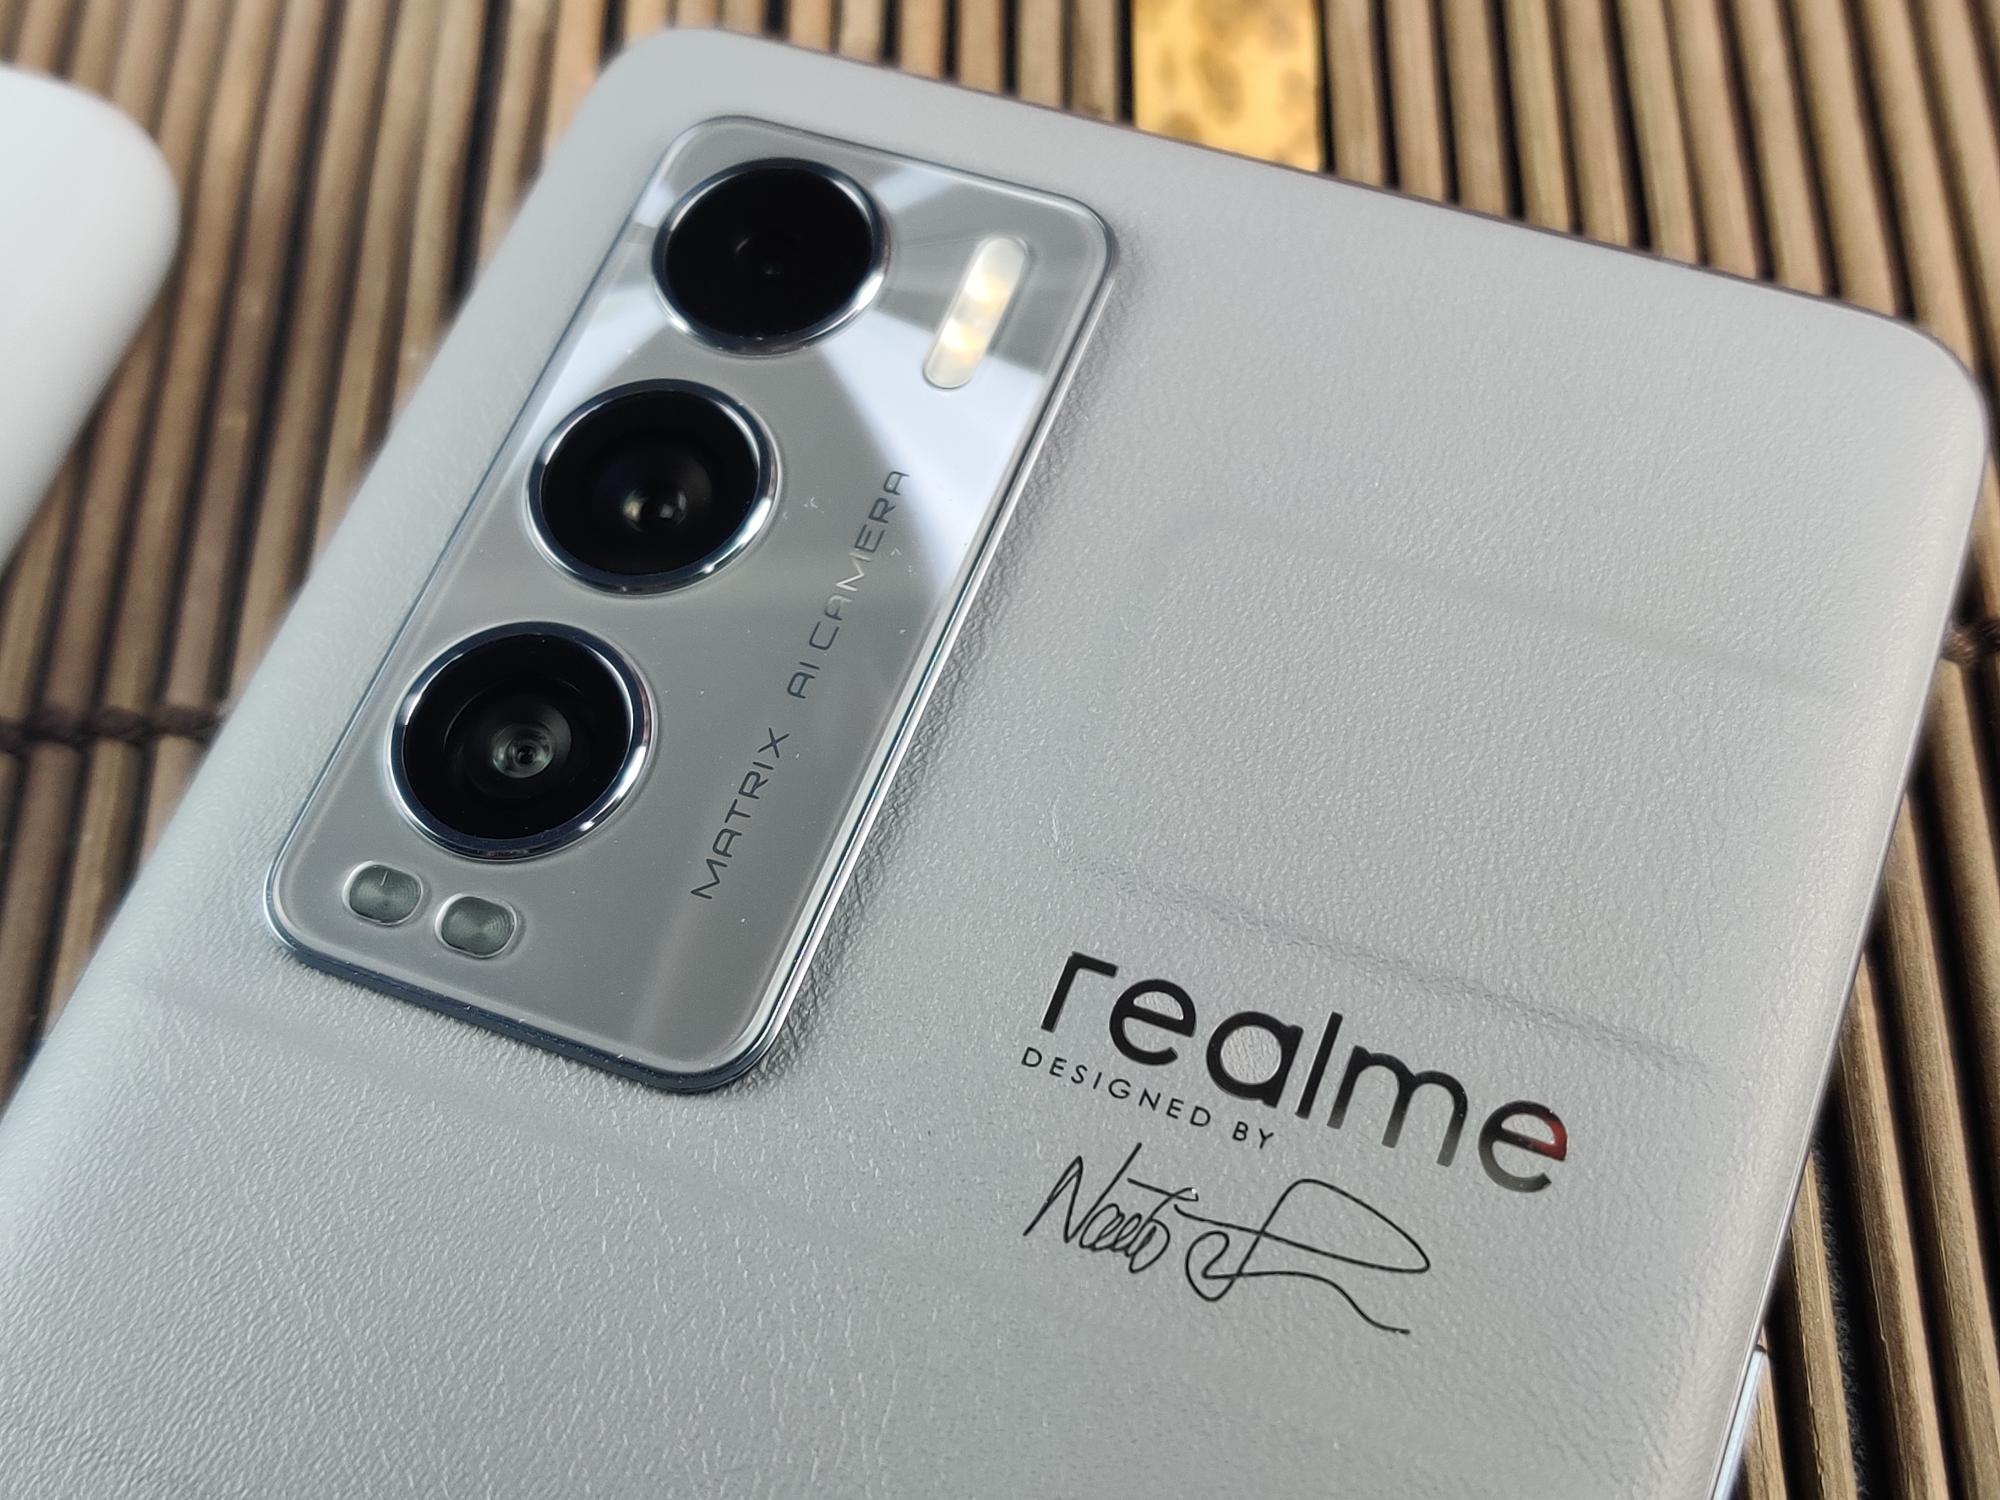 Realme-GT Master Explorer Edition Smartphone, 5G, Snapdragon 870